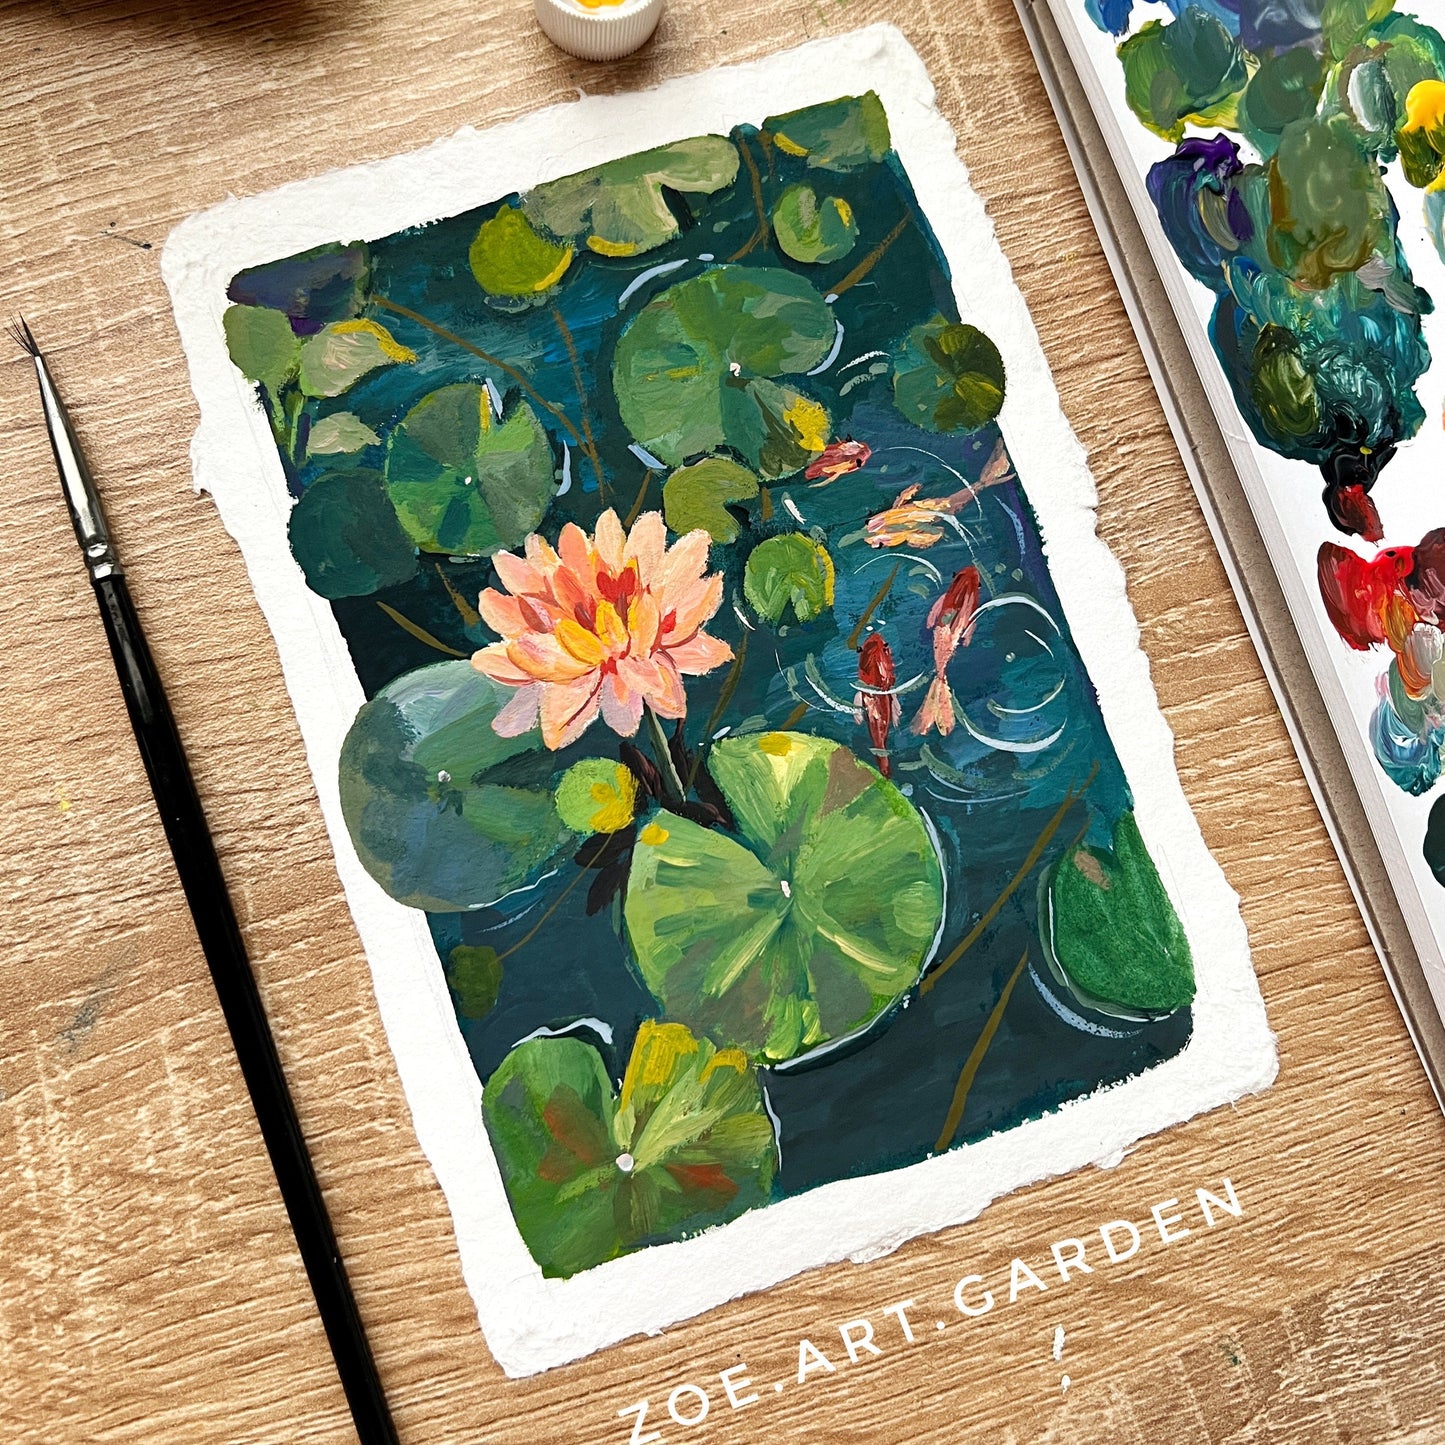 Lotus pond study I- Original gouache painting